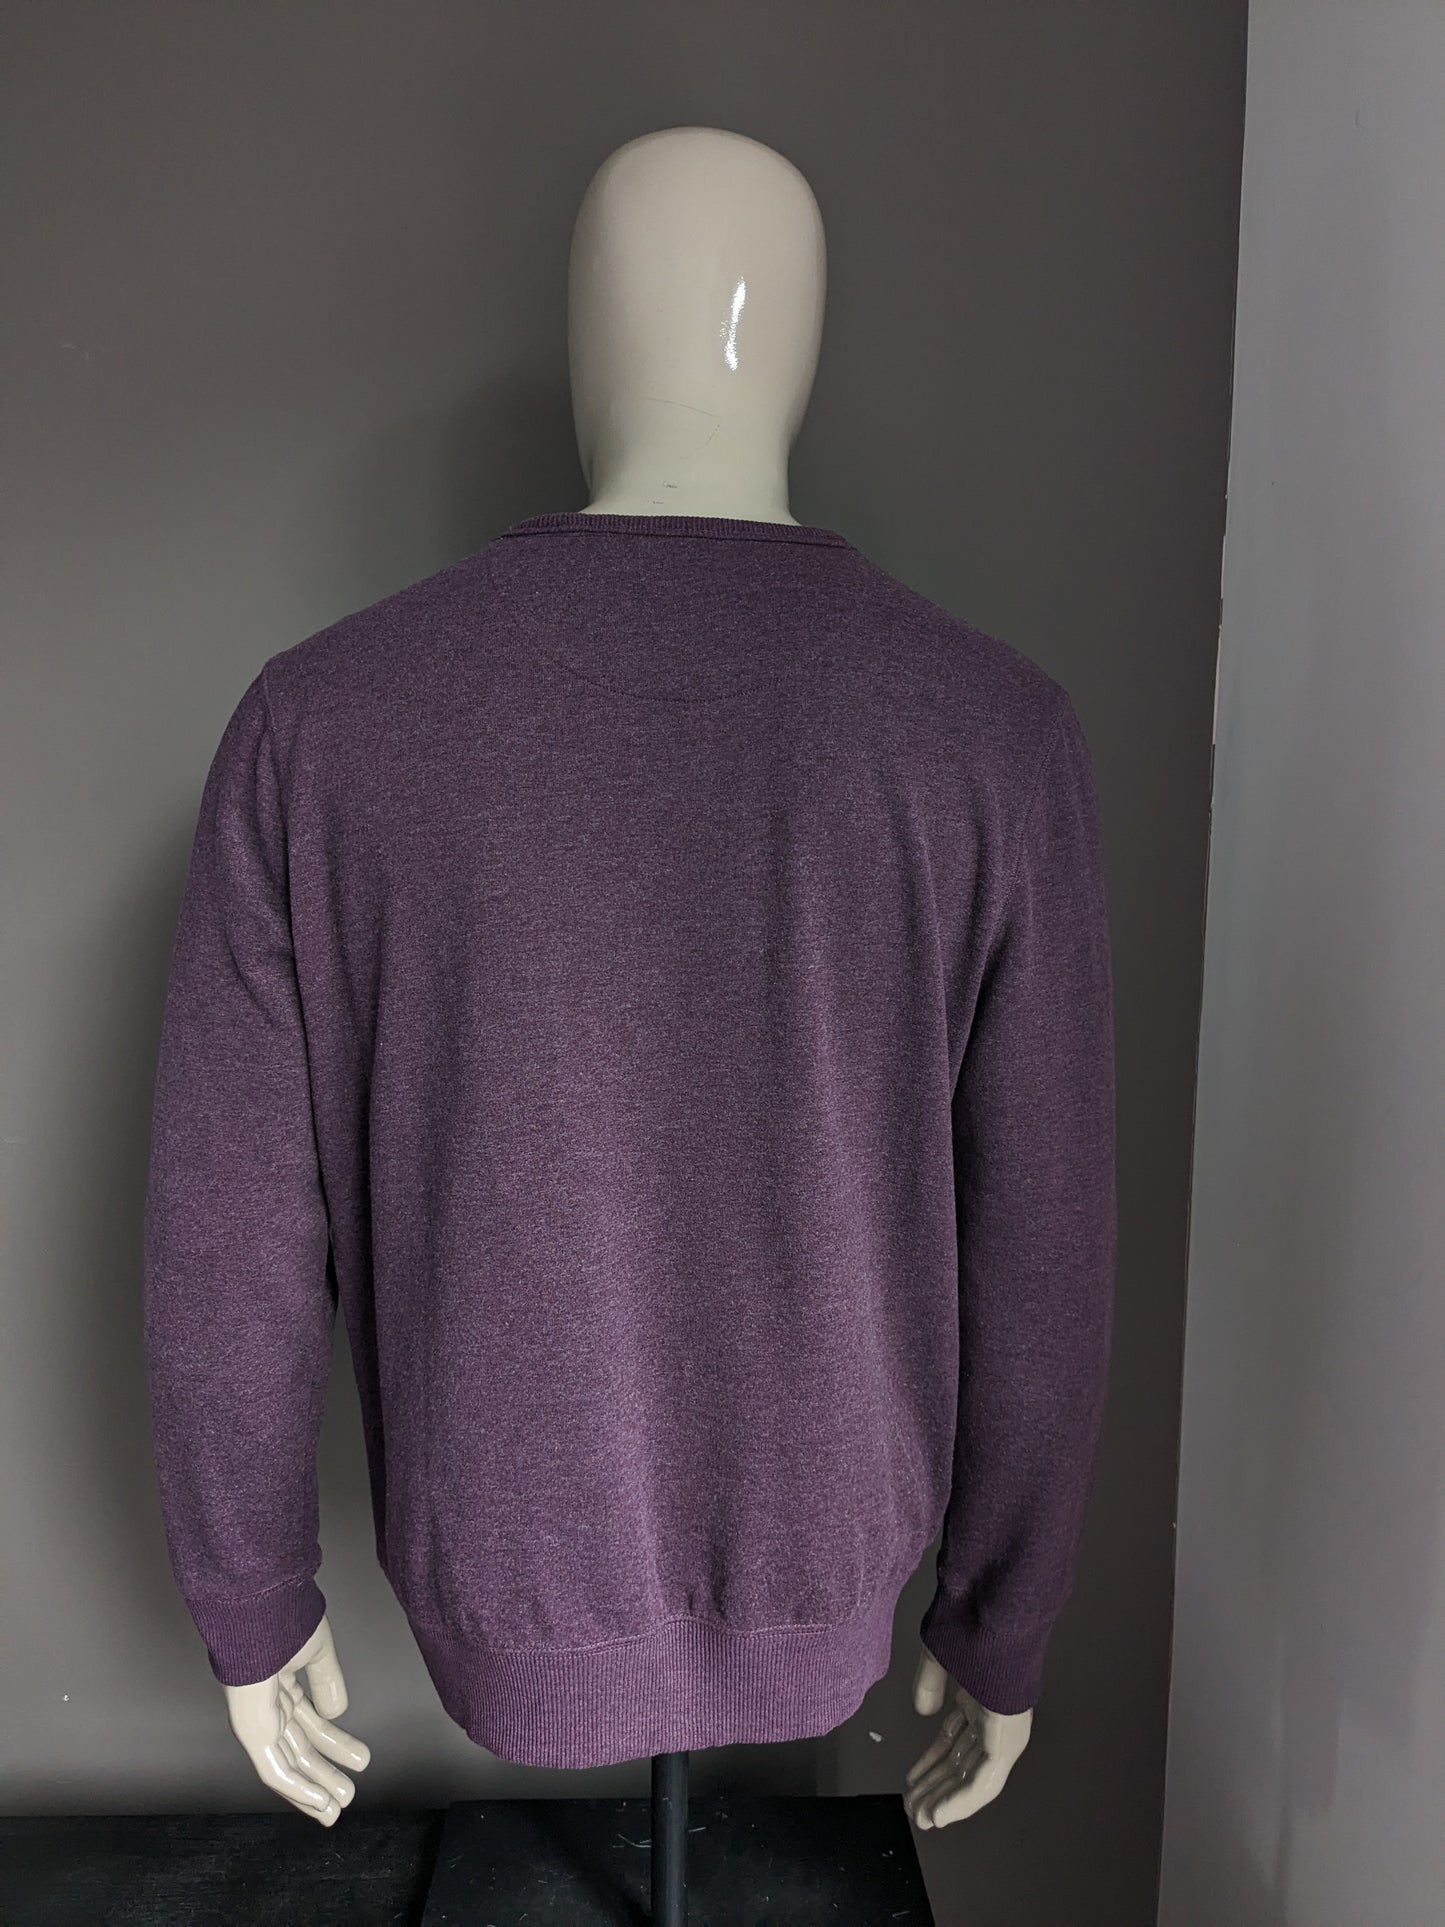 M & S Collection Basic Sweater. Lila grau gemischt. Größe L. Regelmäßige Passform.